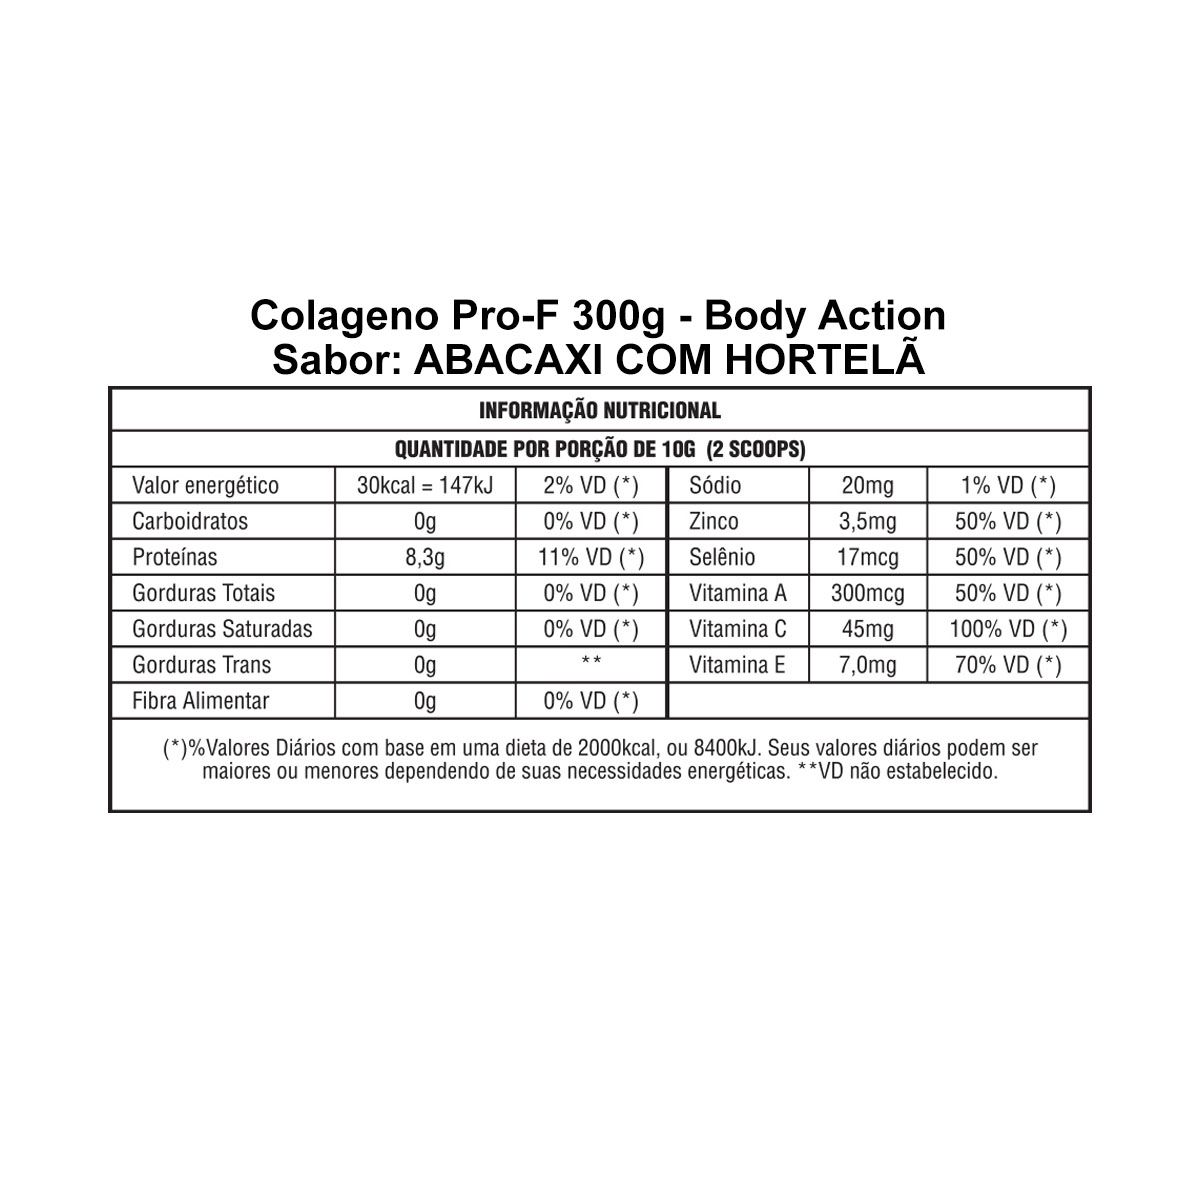 Colágeno Pro-F 300g - Body Action